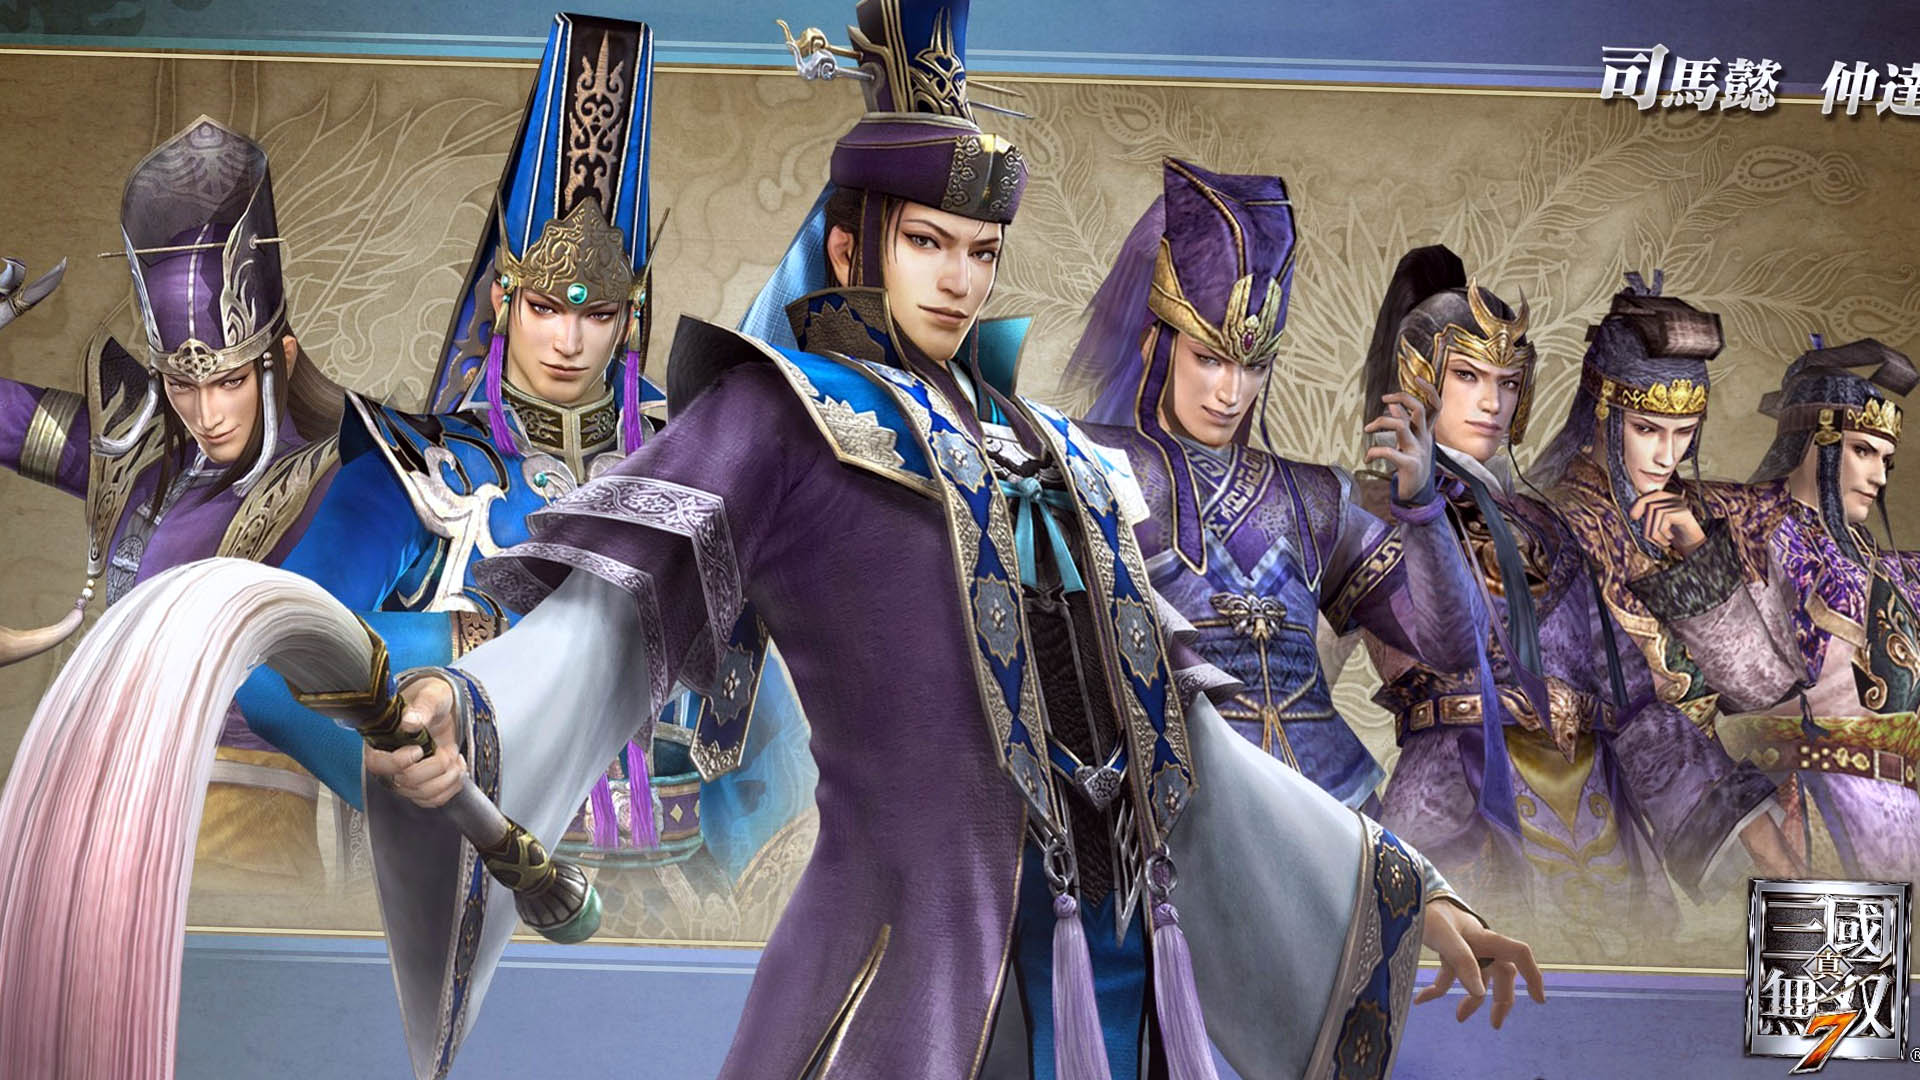 Sima Yi Purple Dynasty Warrior Game Cover Wallpaper